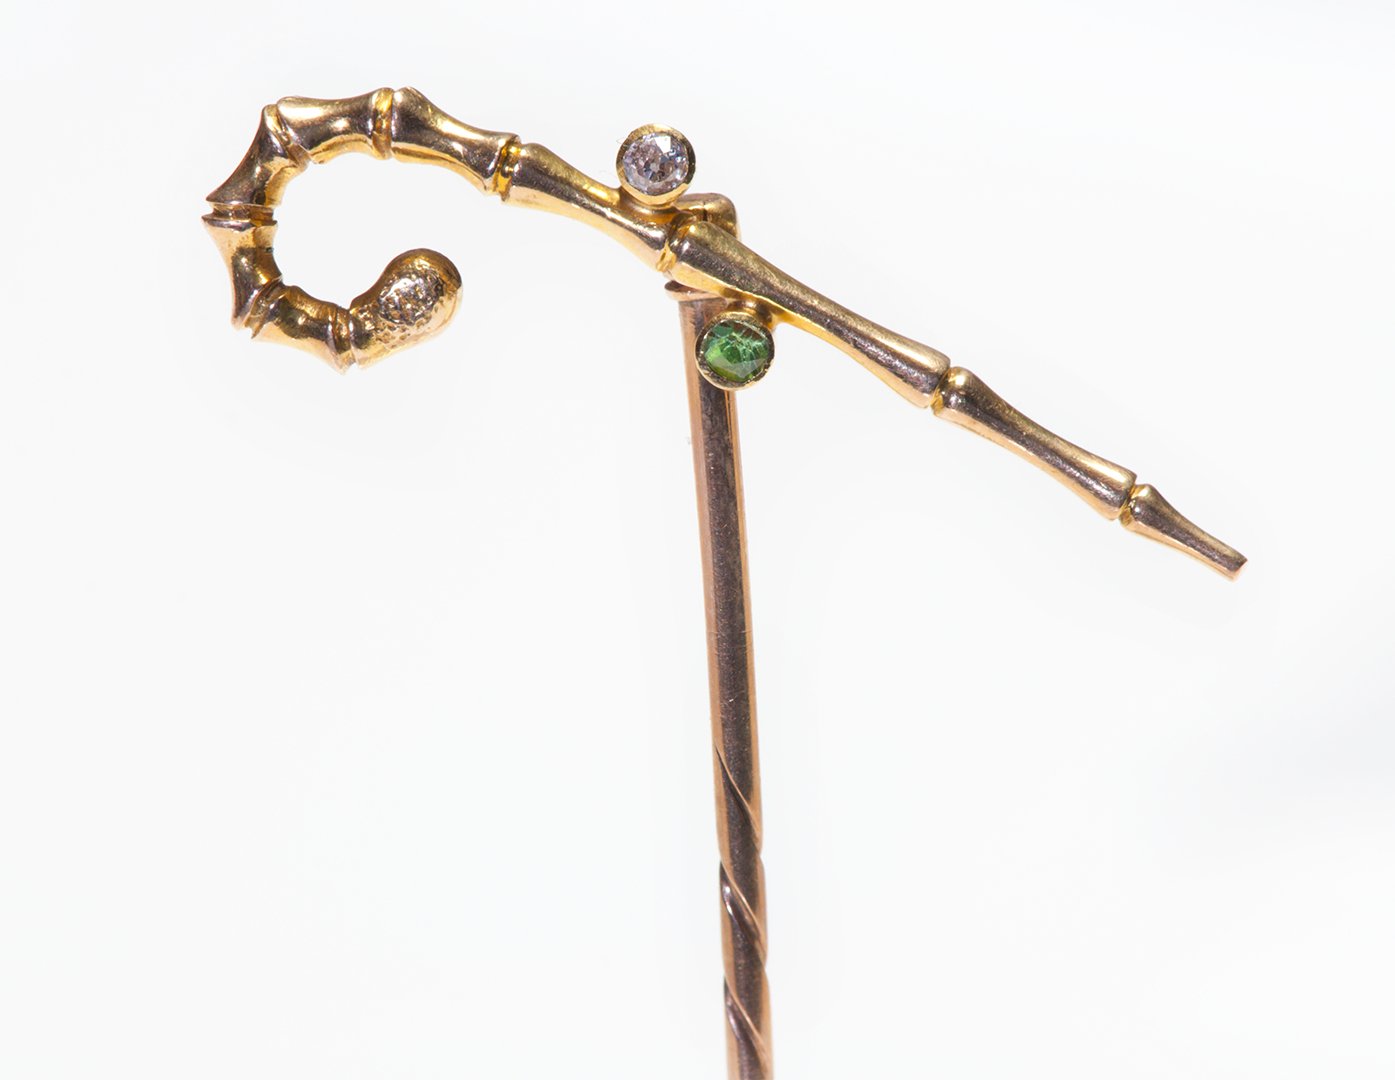 Antique Gold Diamond Demantoid Bamboo Cane Stick Pin